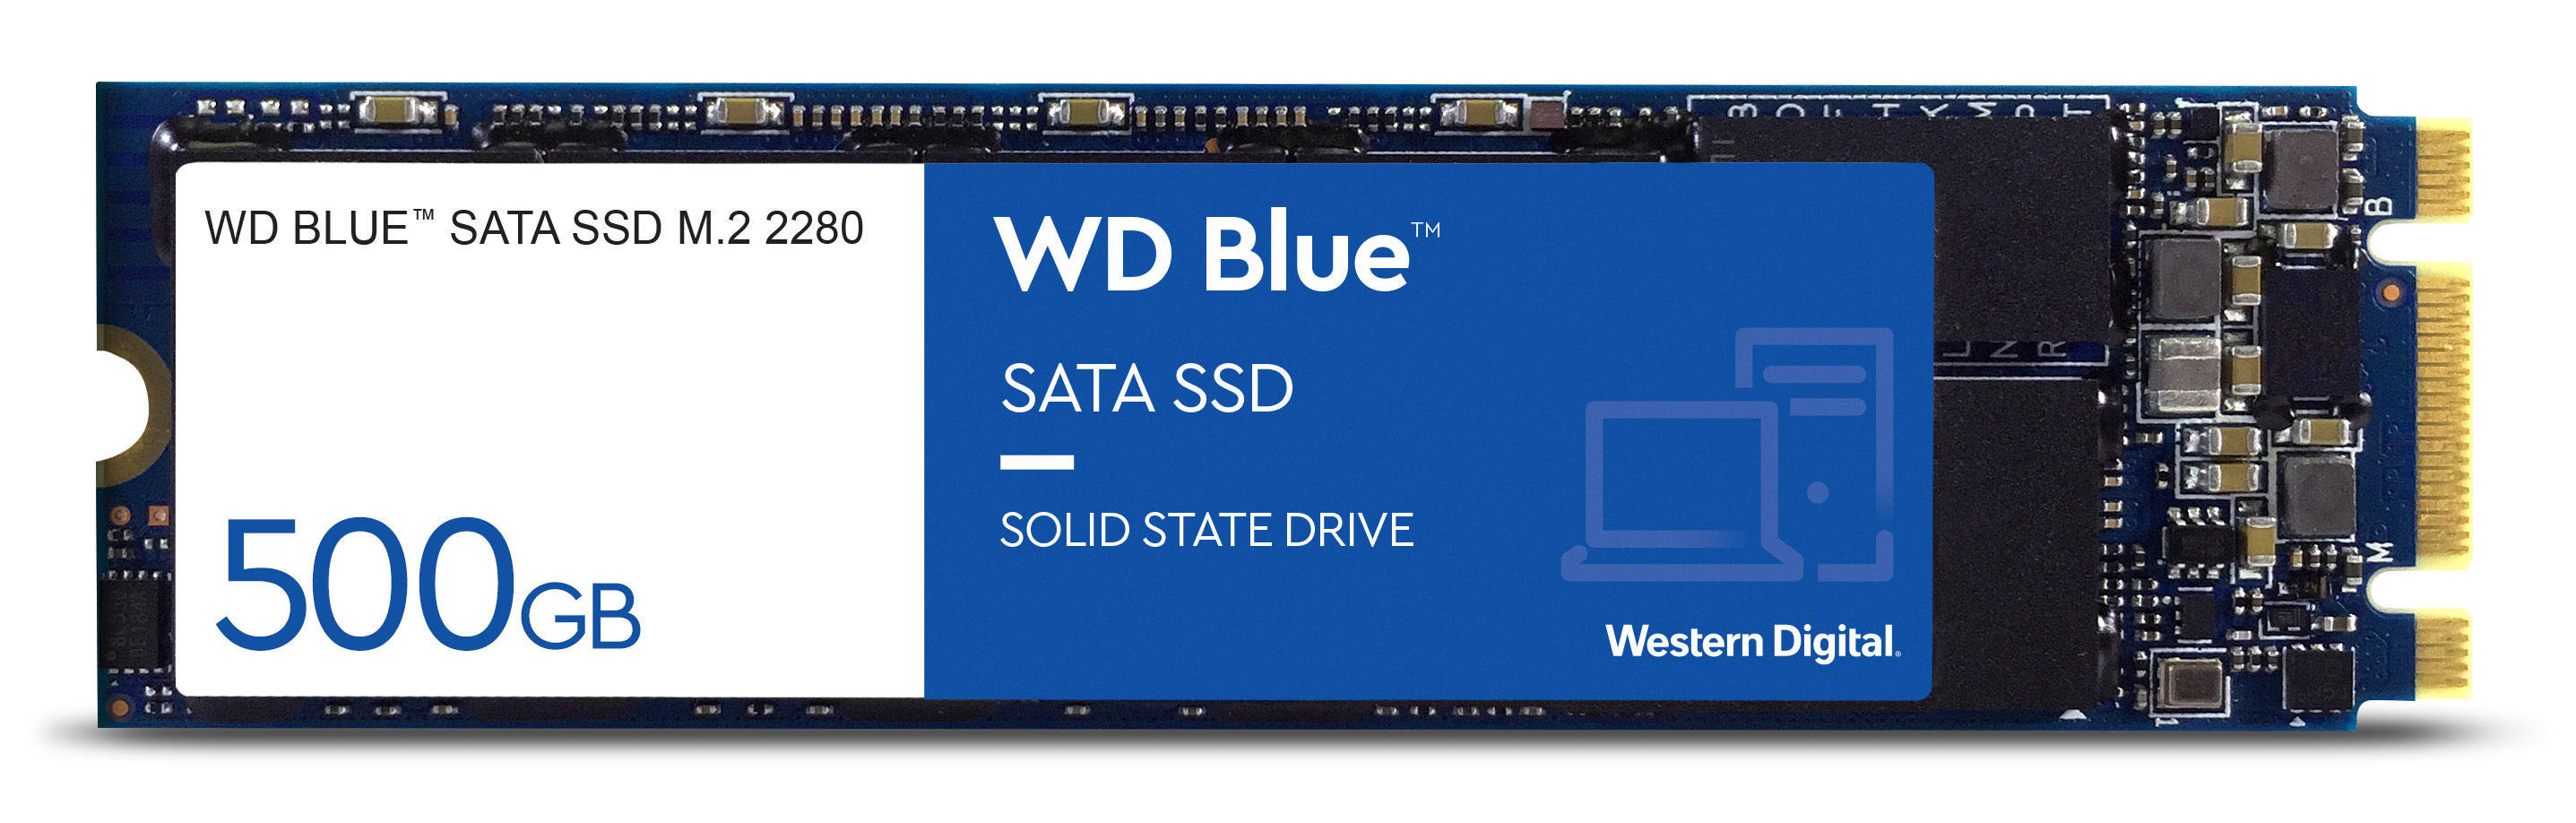 SSD M.2, 500 GB WD Blue™ intern Speicher 3D Retail,